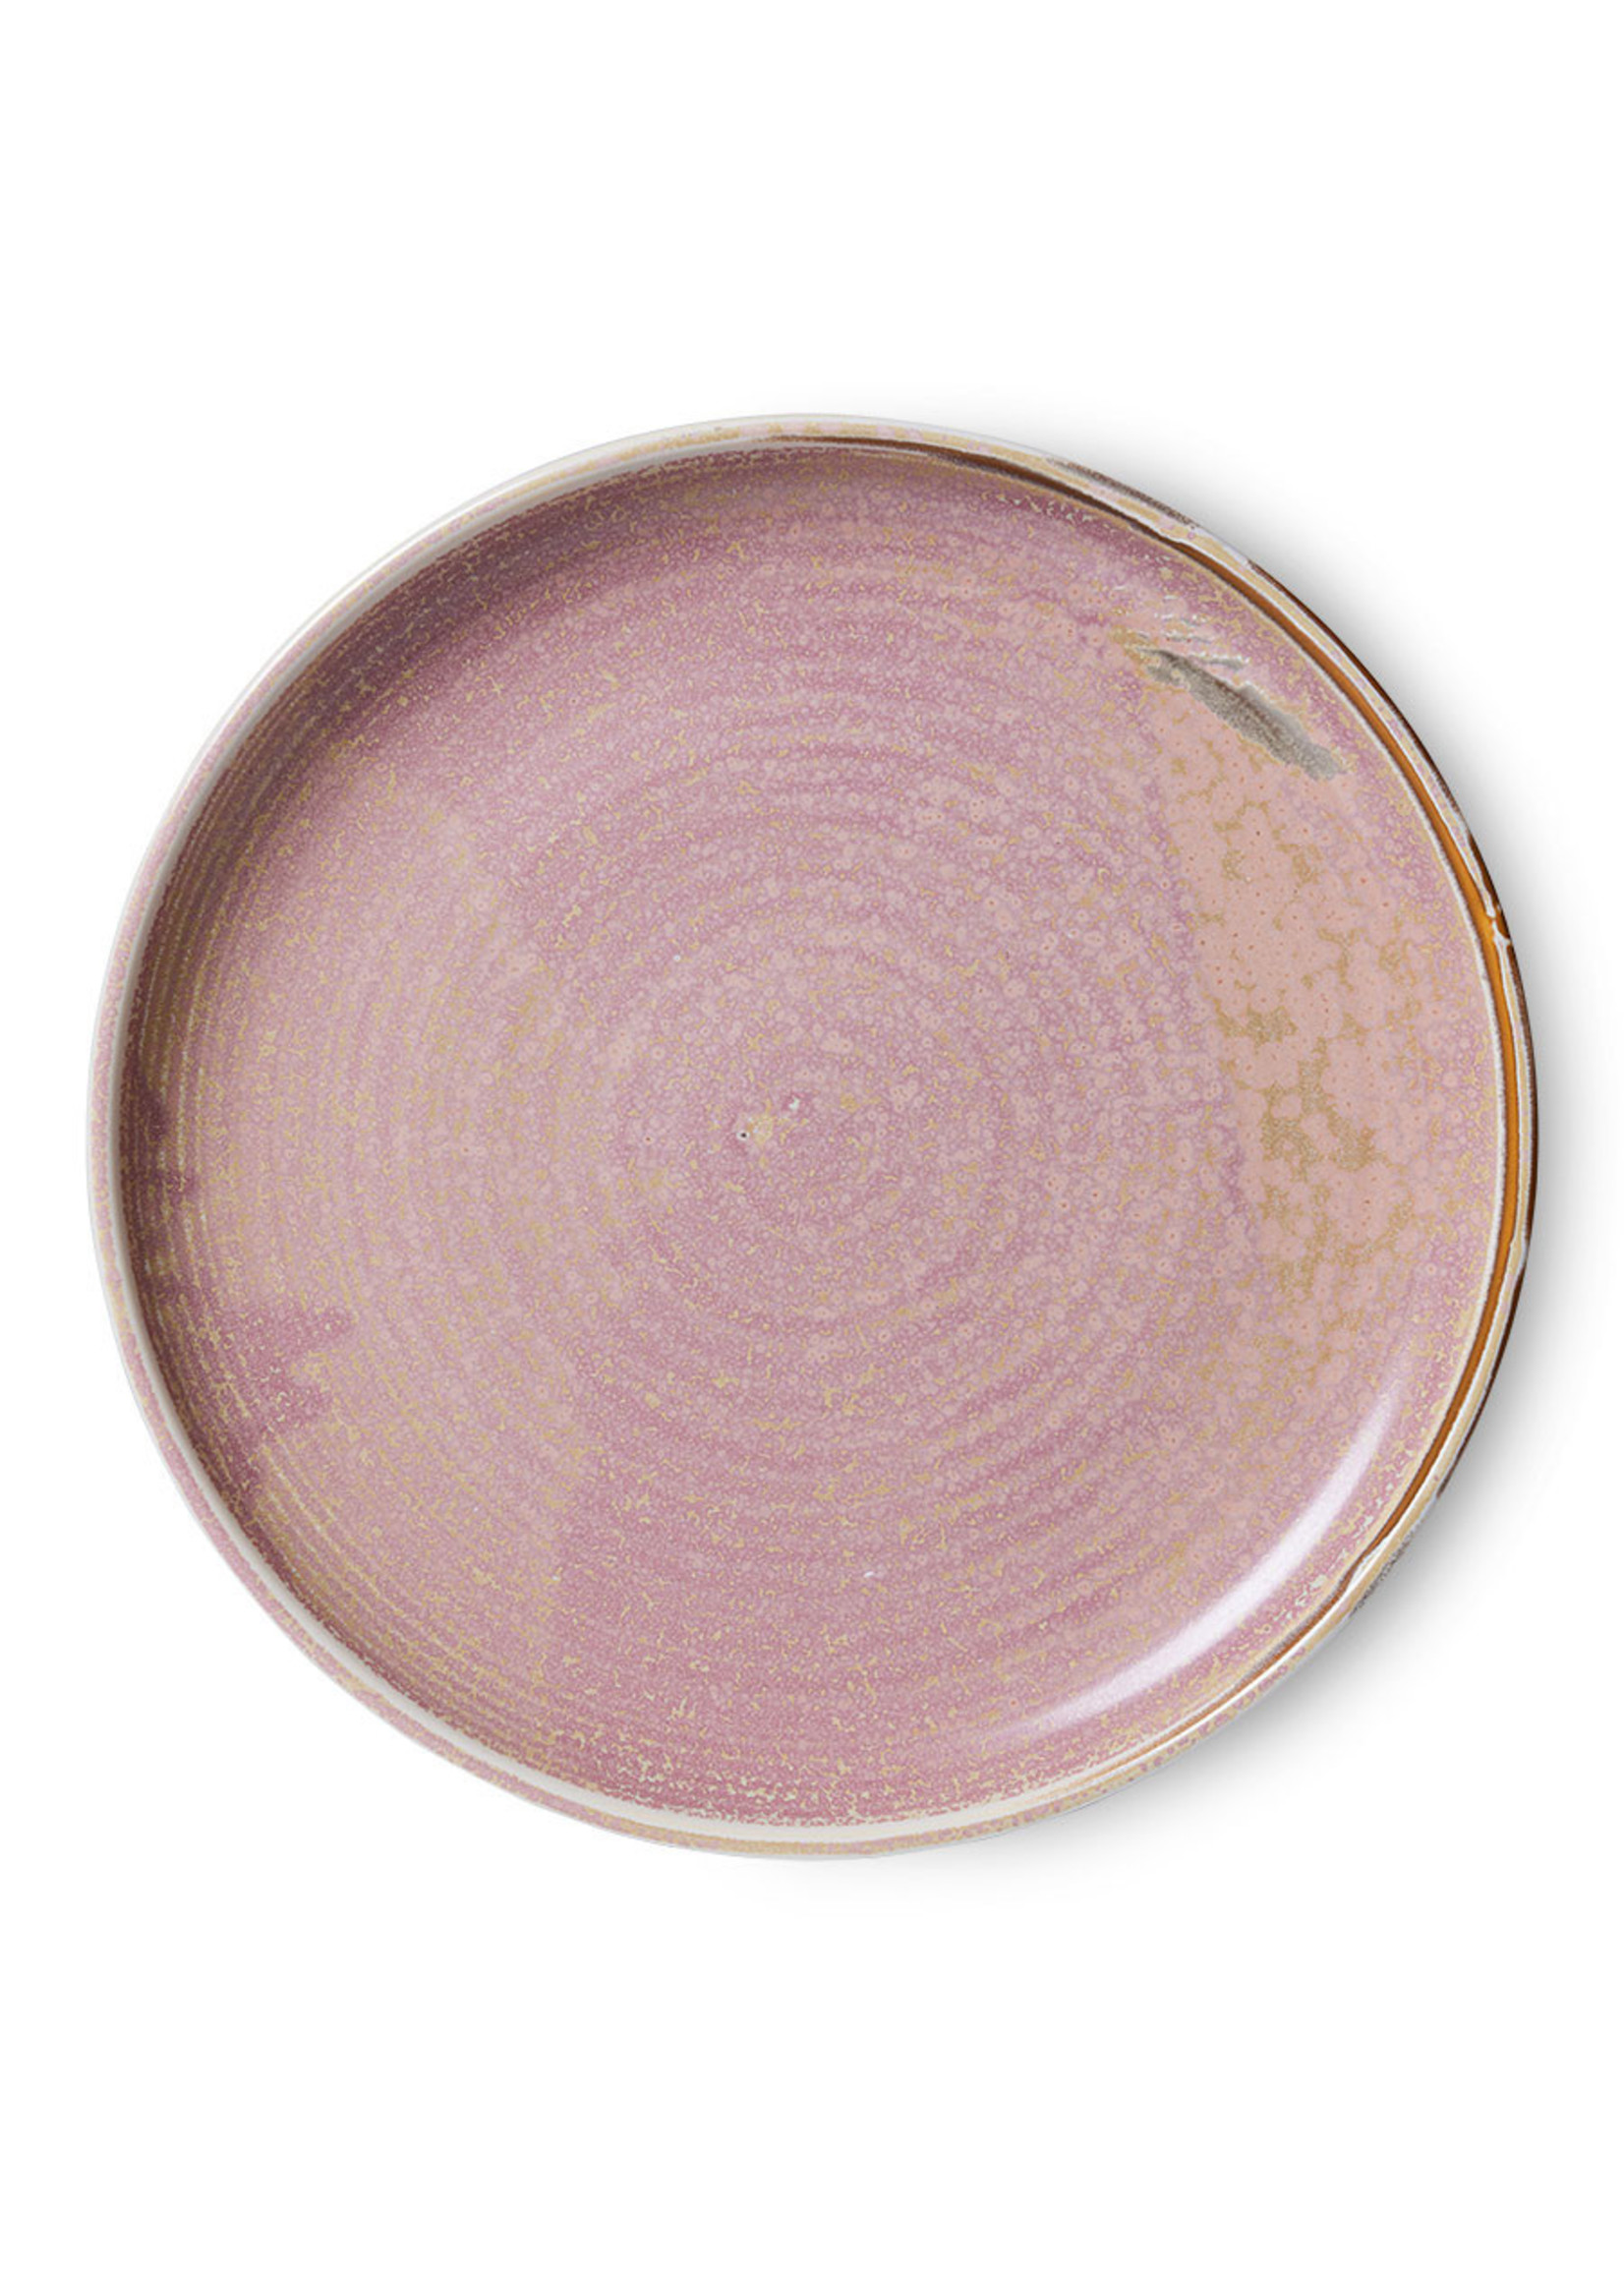 HKliving Chef ceramics: side plate, rustic pink